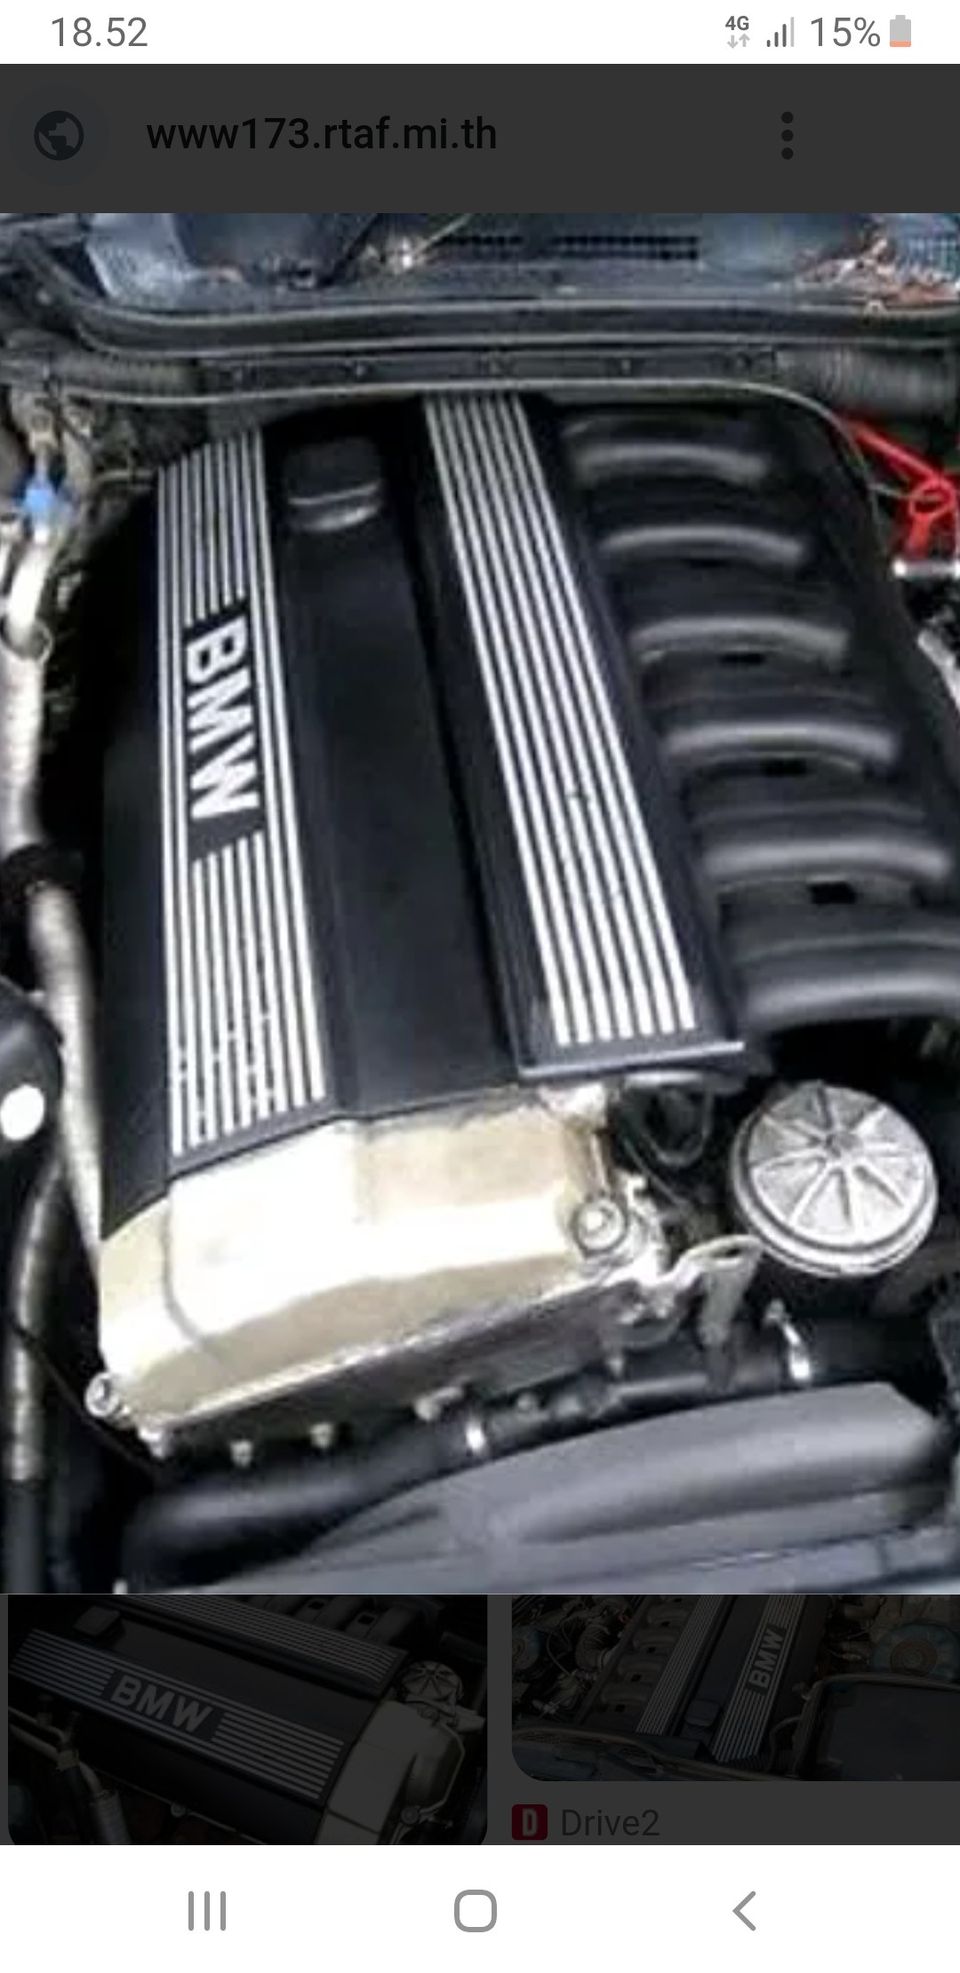 M50b28 Tako Turbo moottori